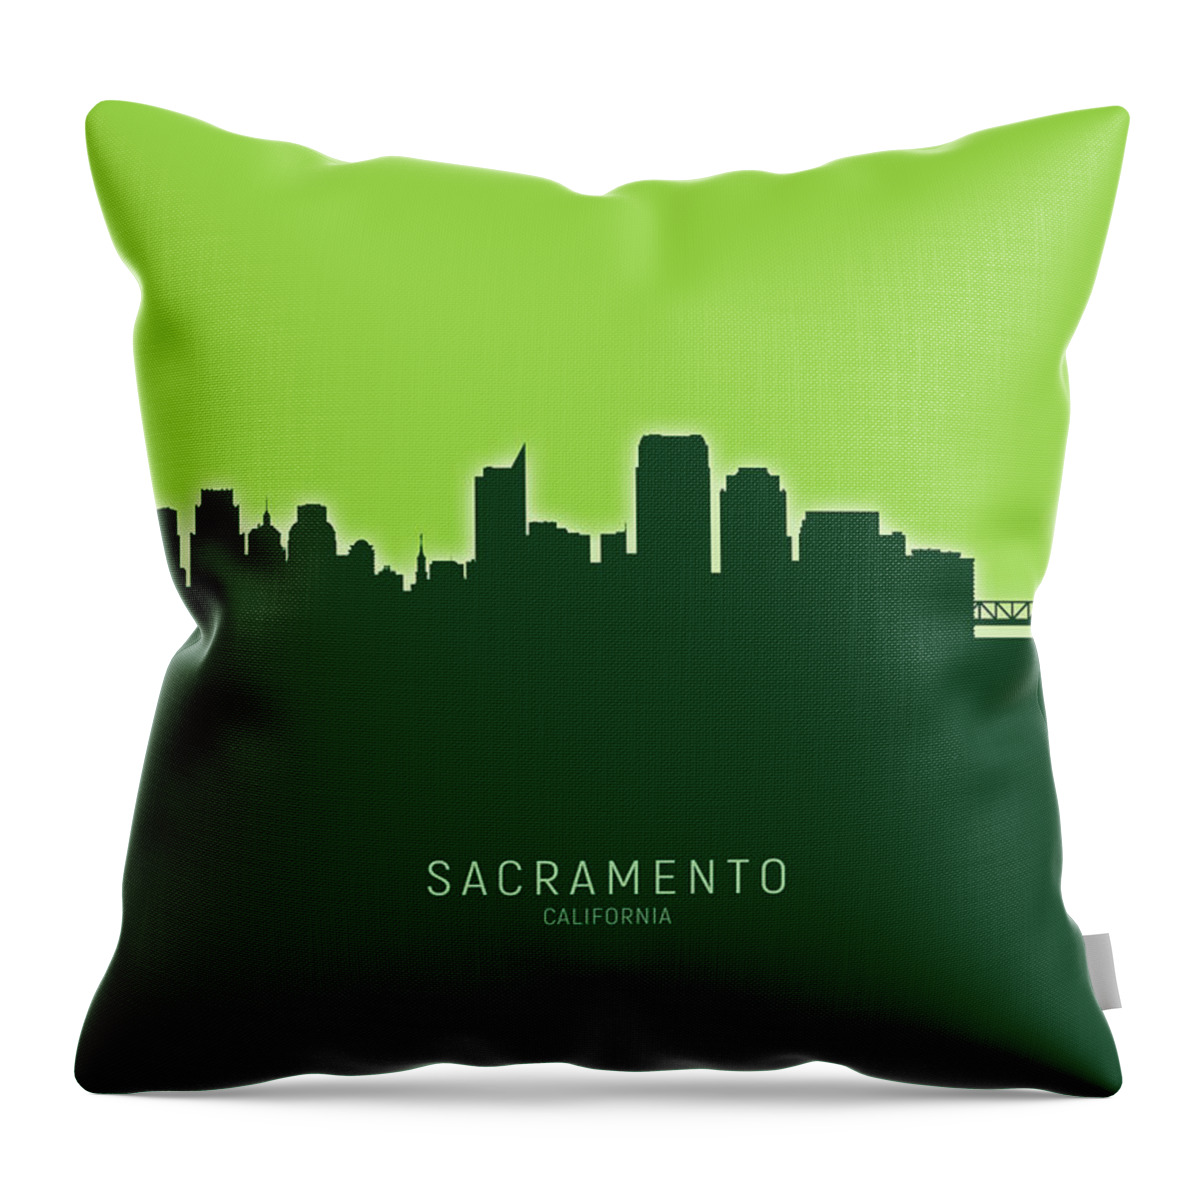 Sacramento Throw Pillow featuring the digital art Sacramento California Skyline #26 by Michael Tompsett